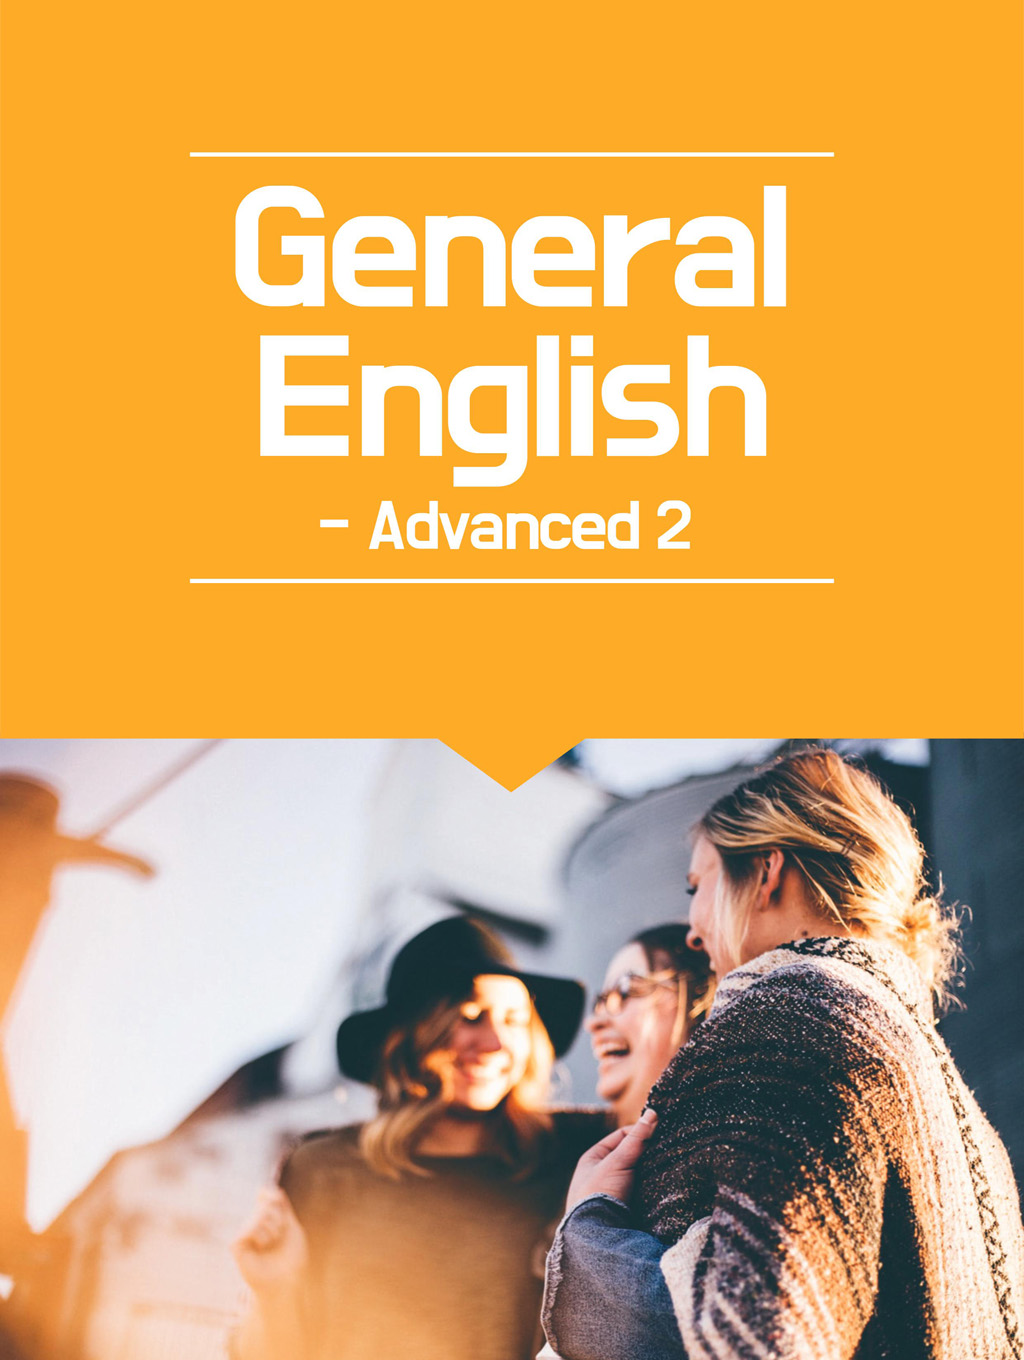 General English - Advanced 2